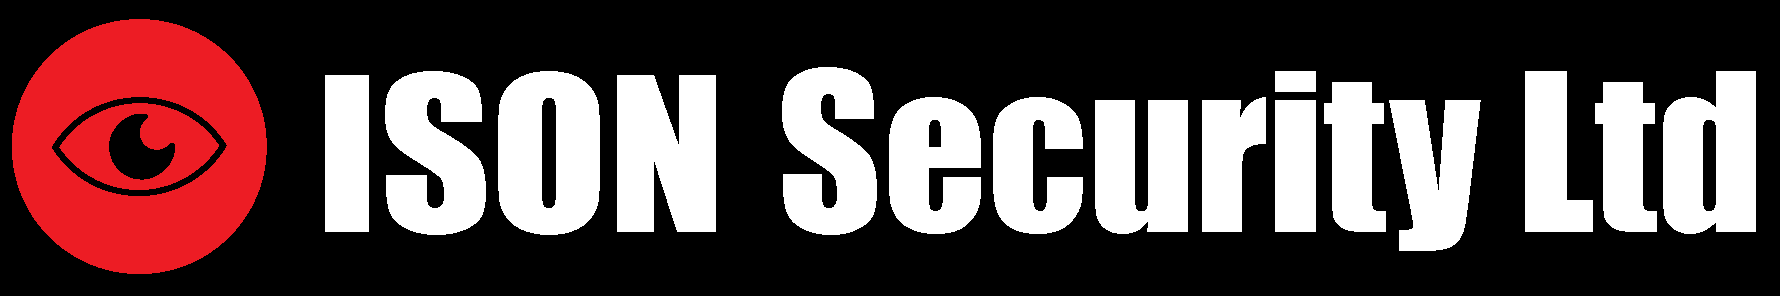 logo for ISON Security Ltd